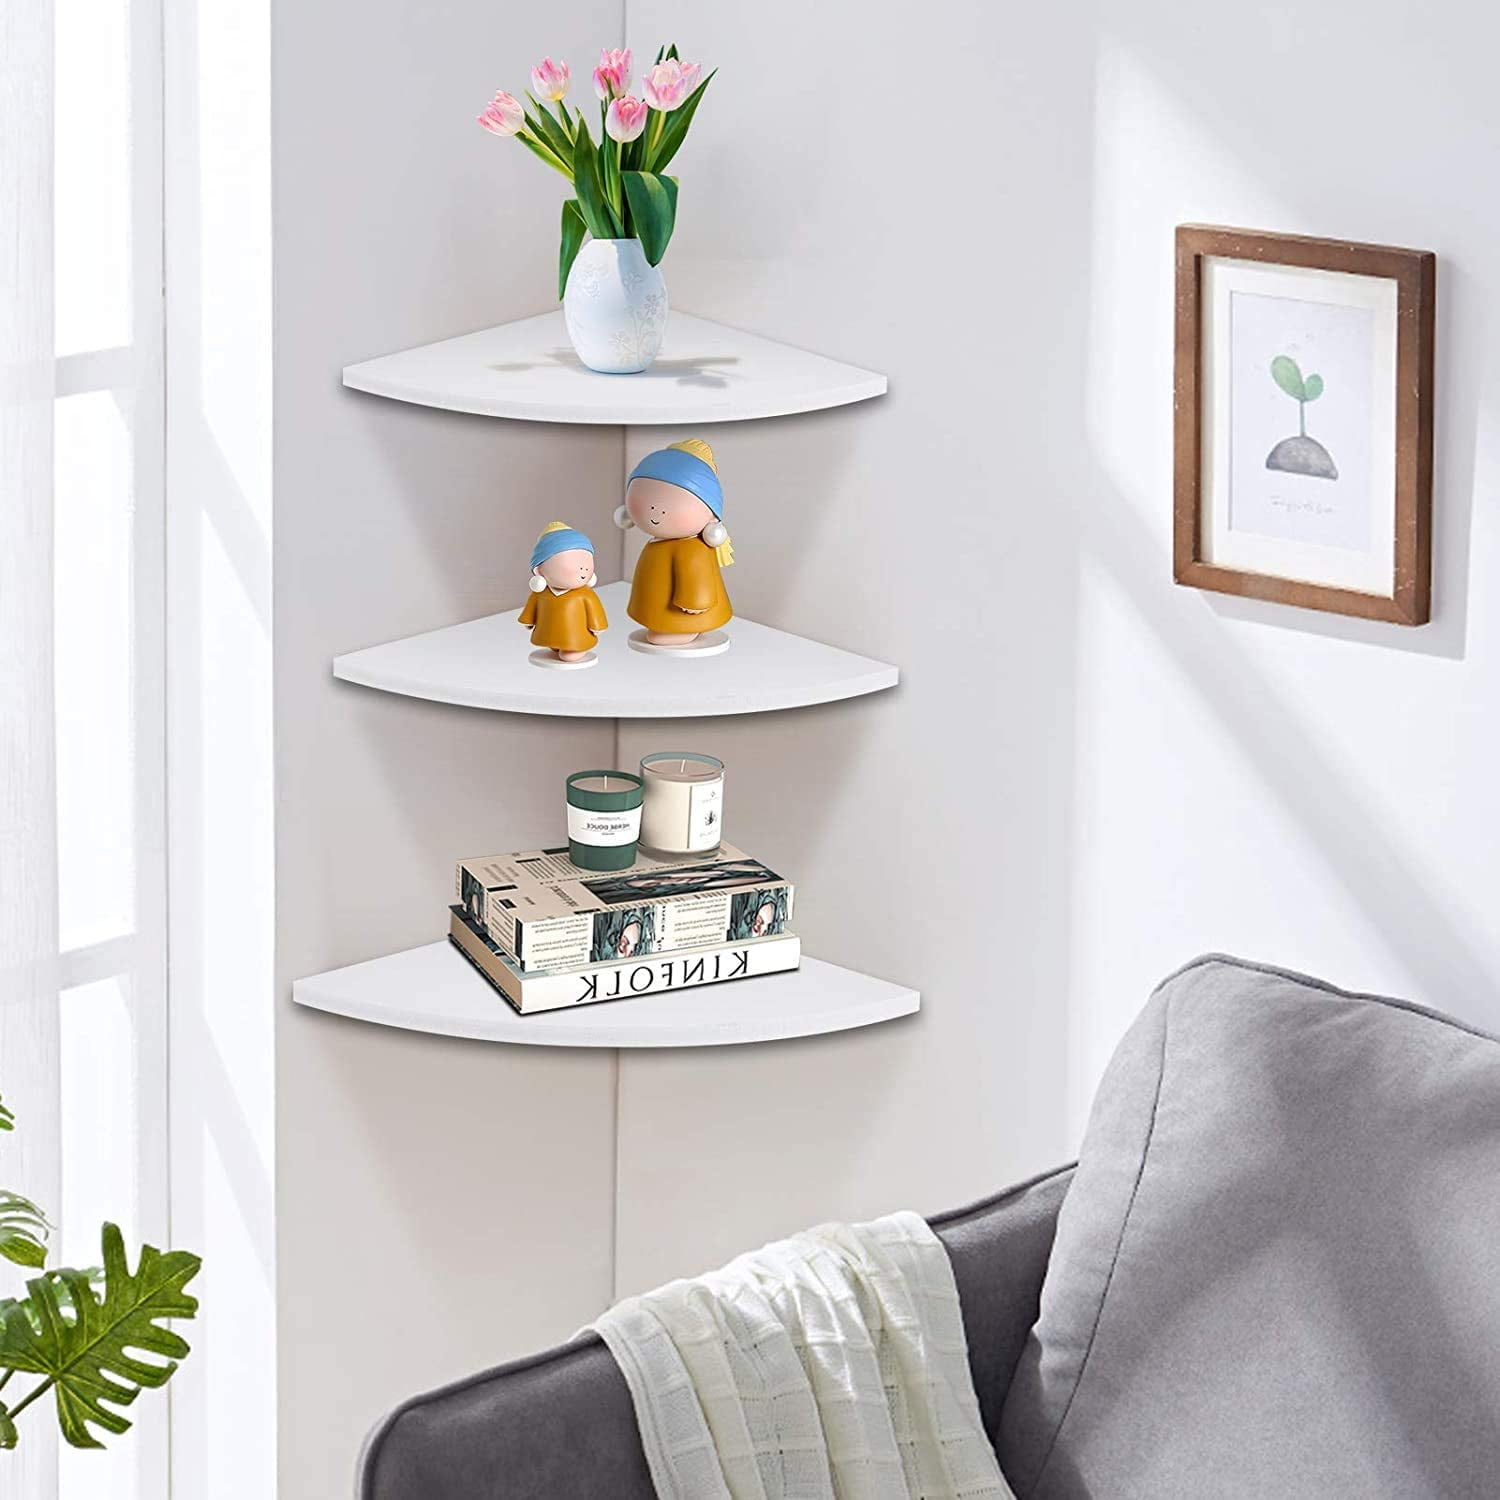 floating corner wall shelf idea